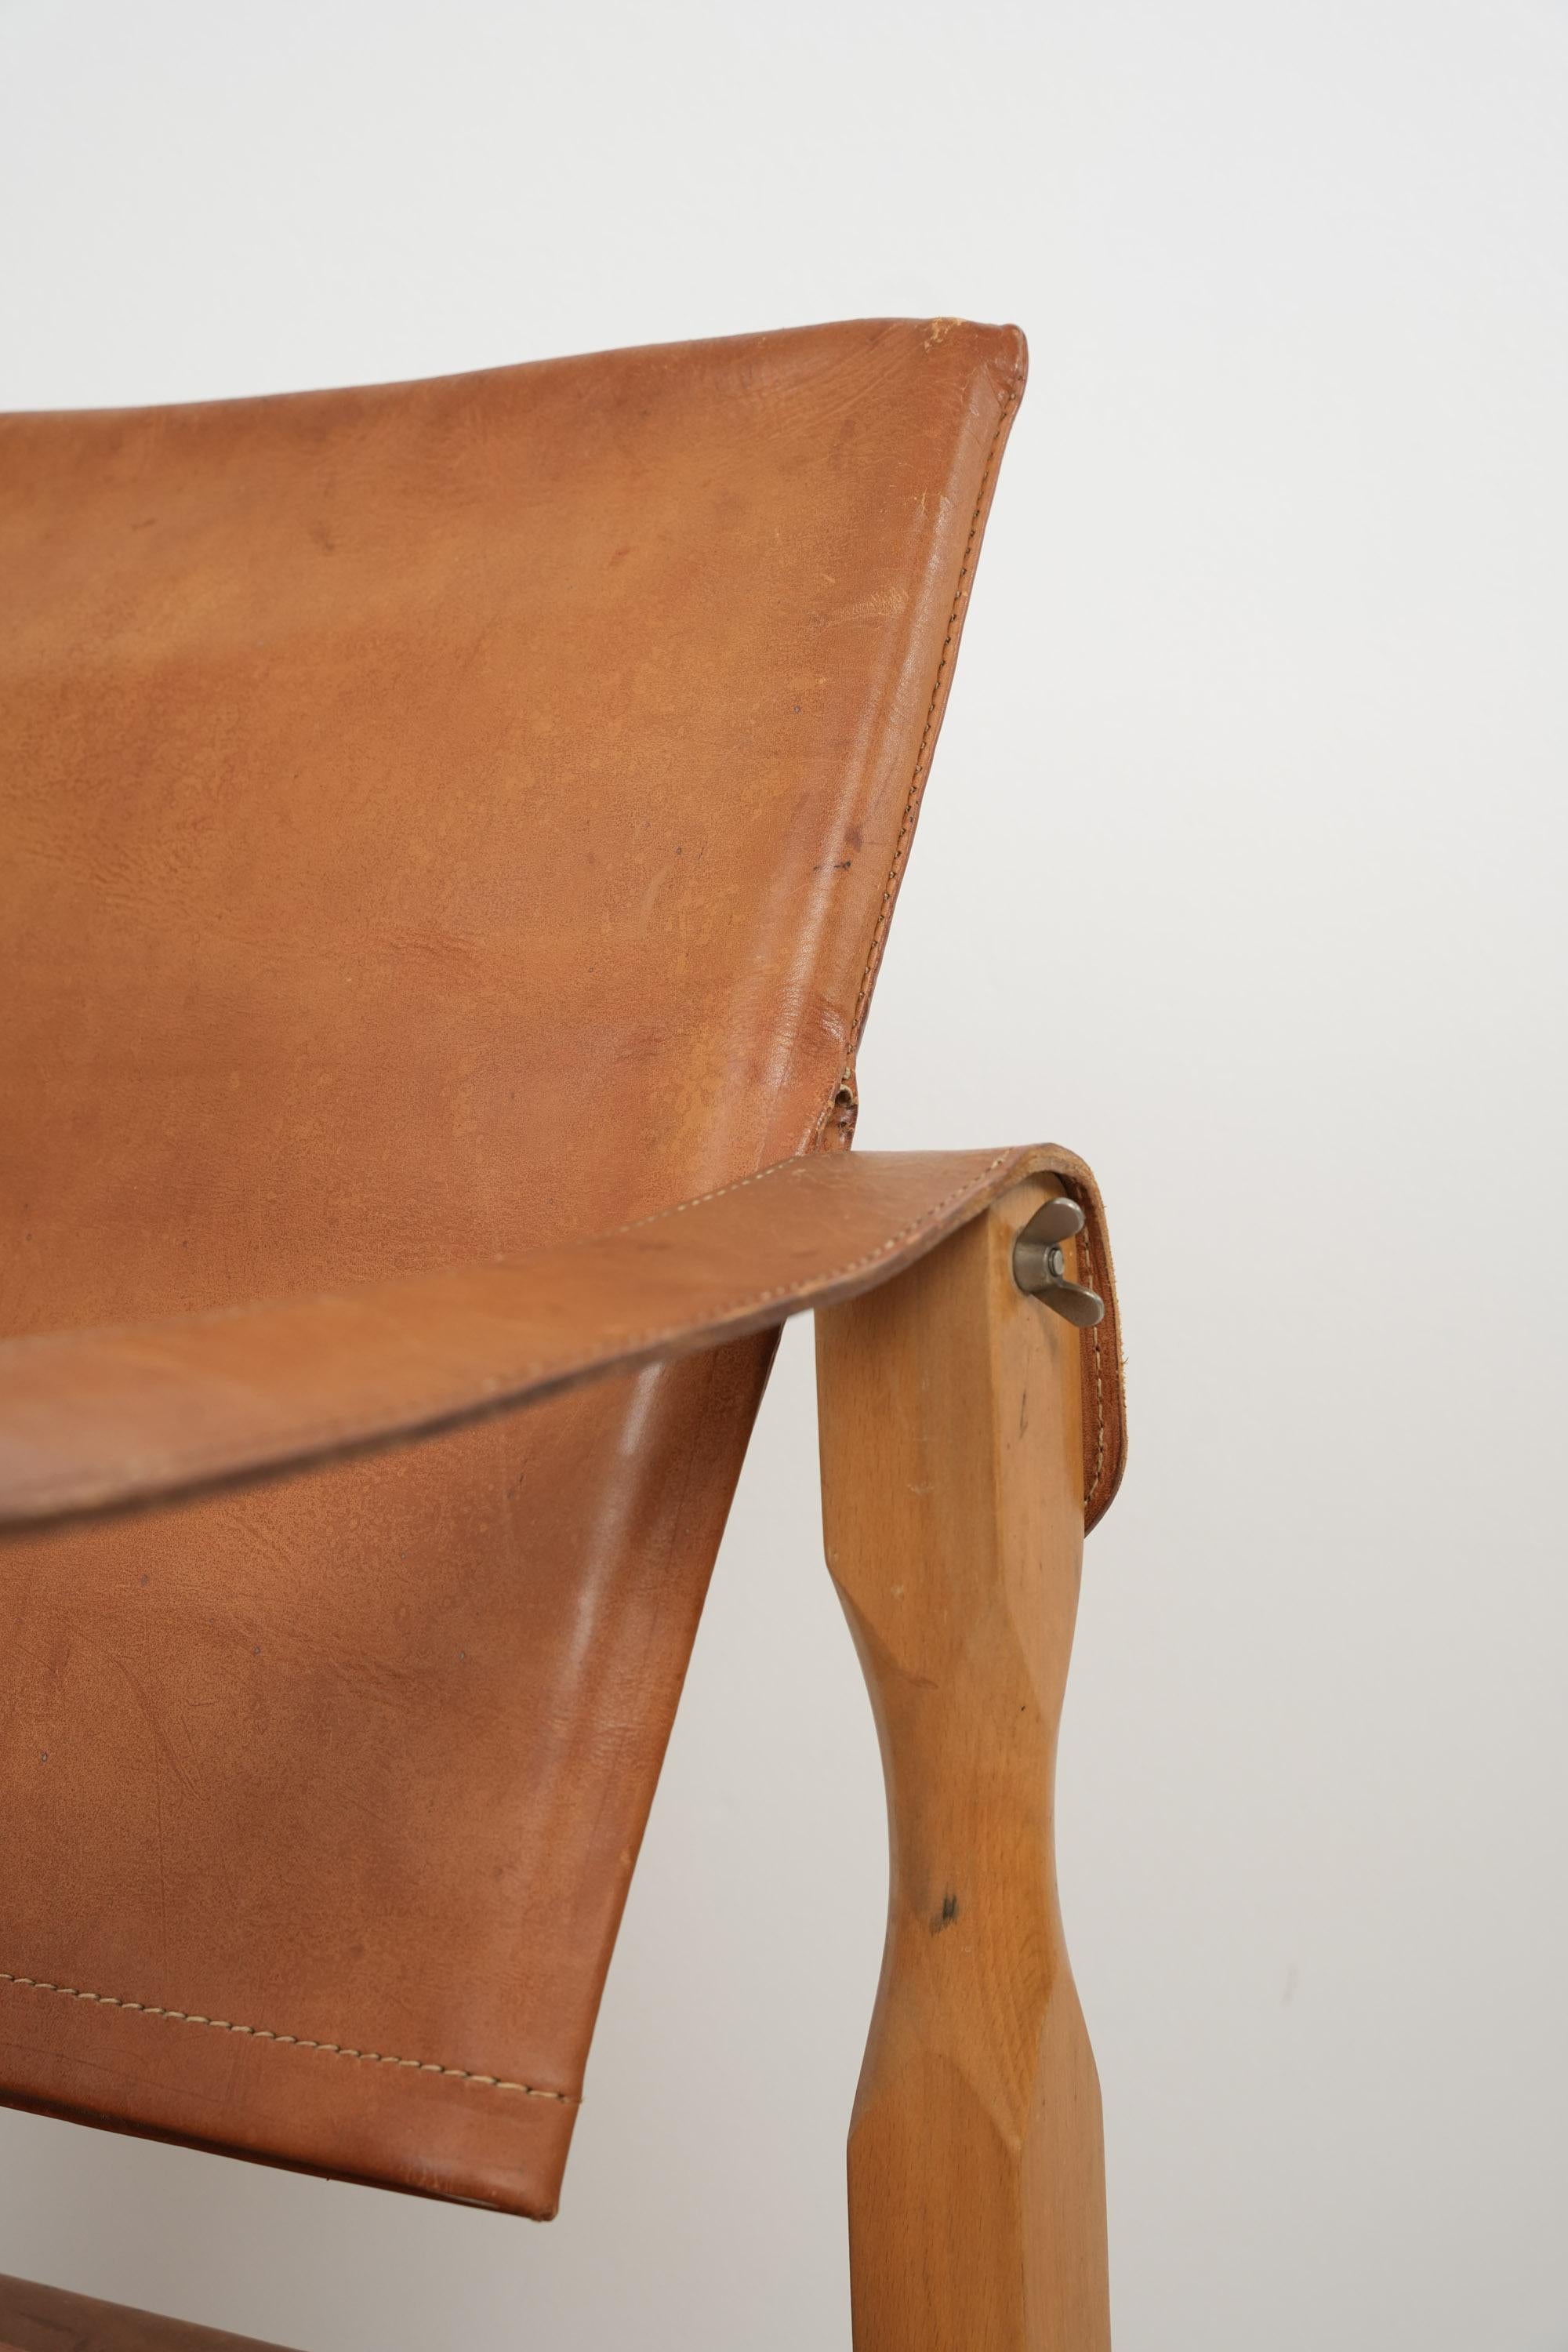 Wilhelm Kienzle Leather Safari Chair 1950s In Good Condition For Sale In Čelinac, BA